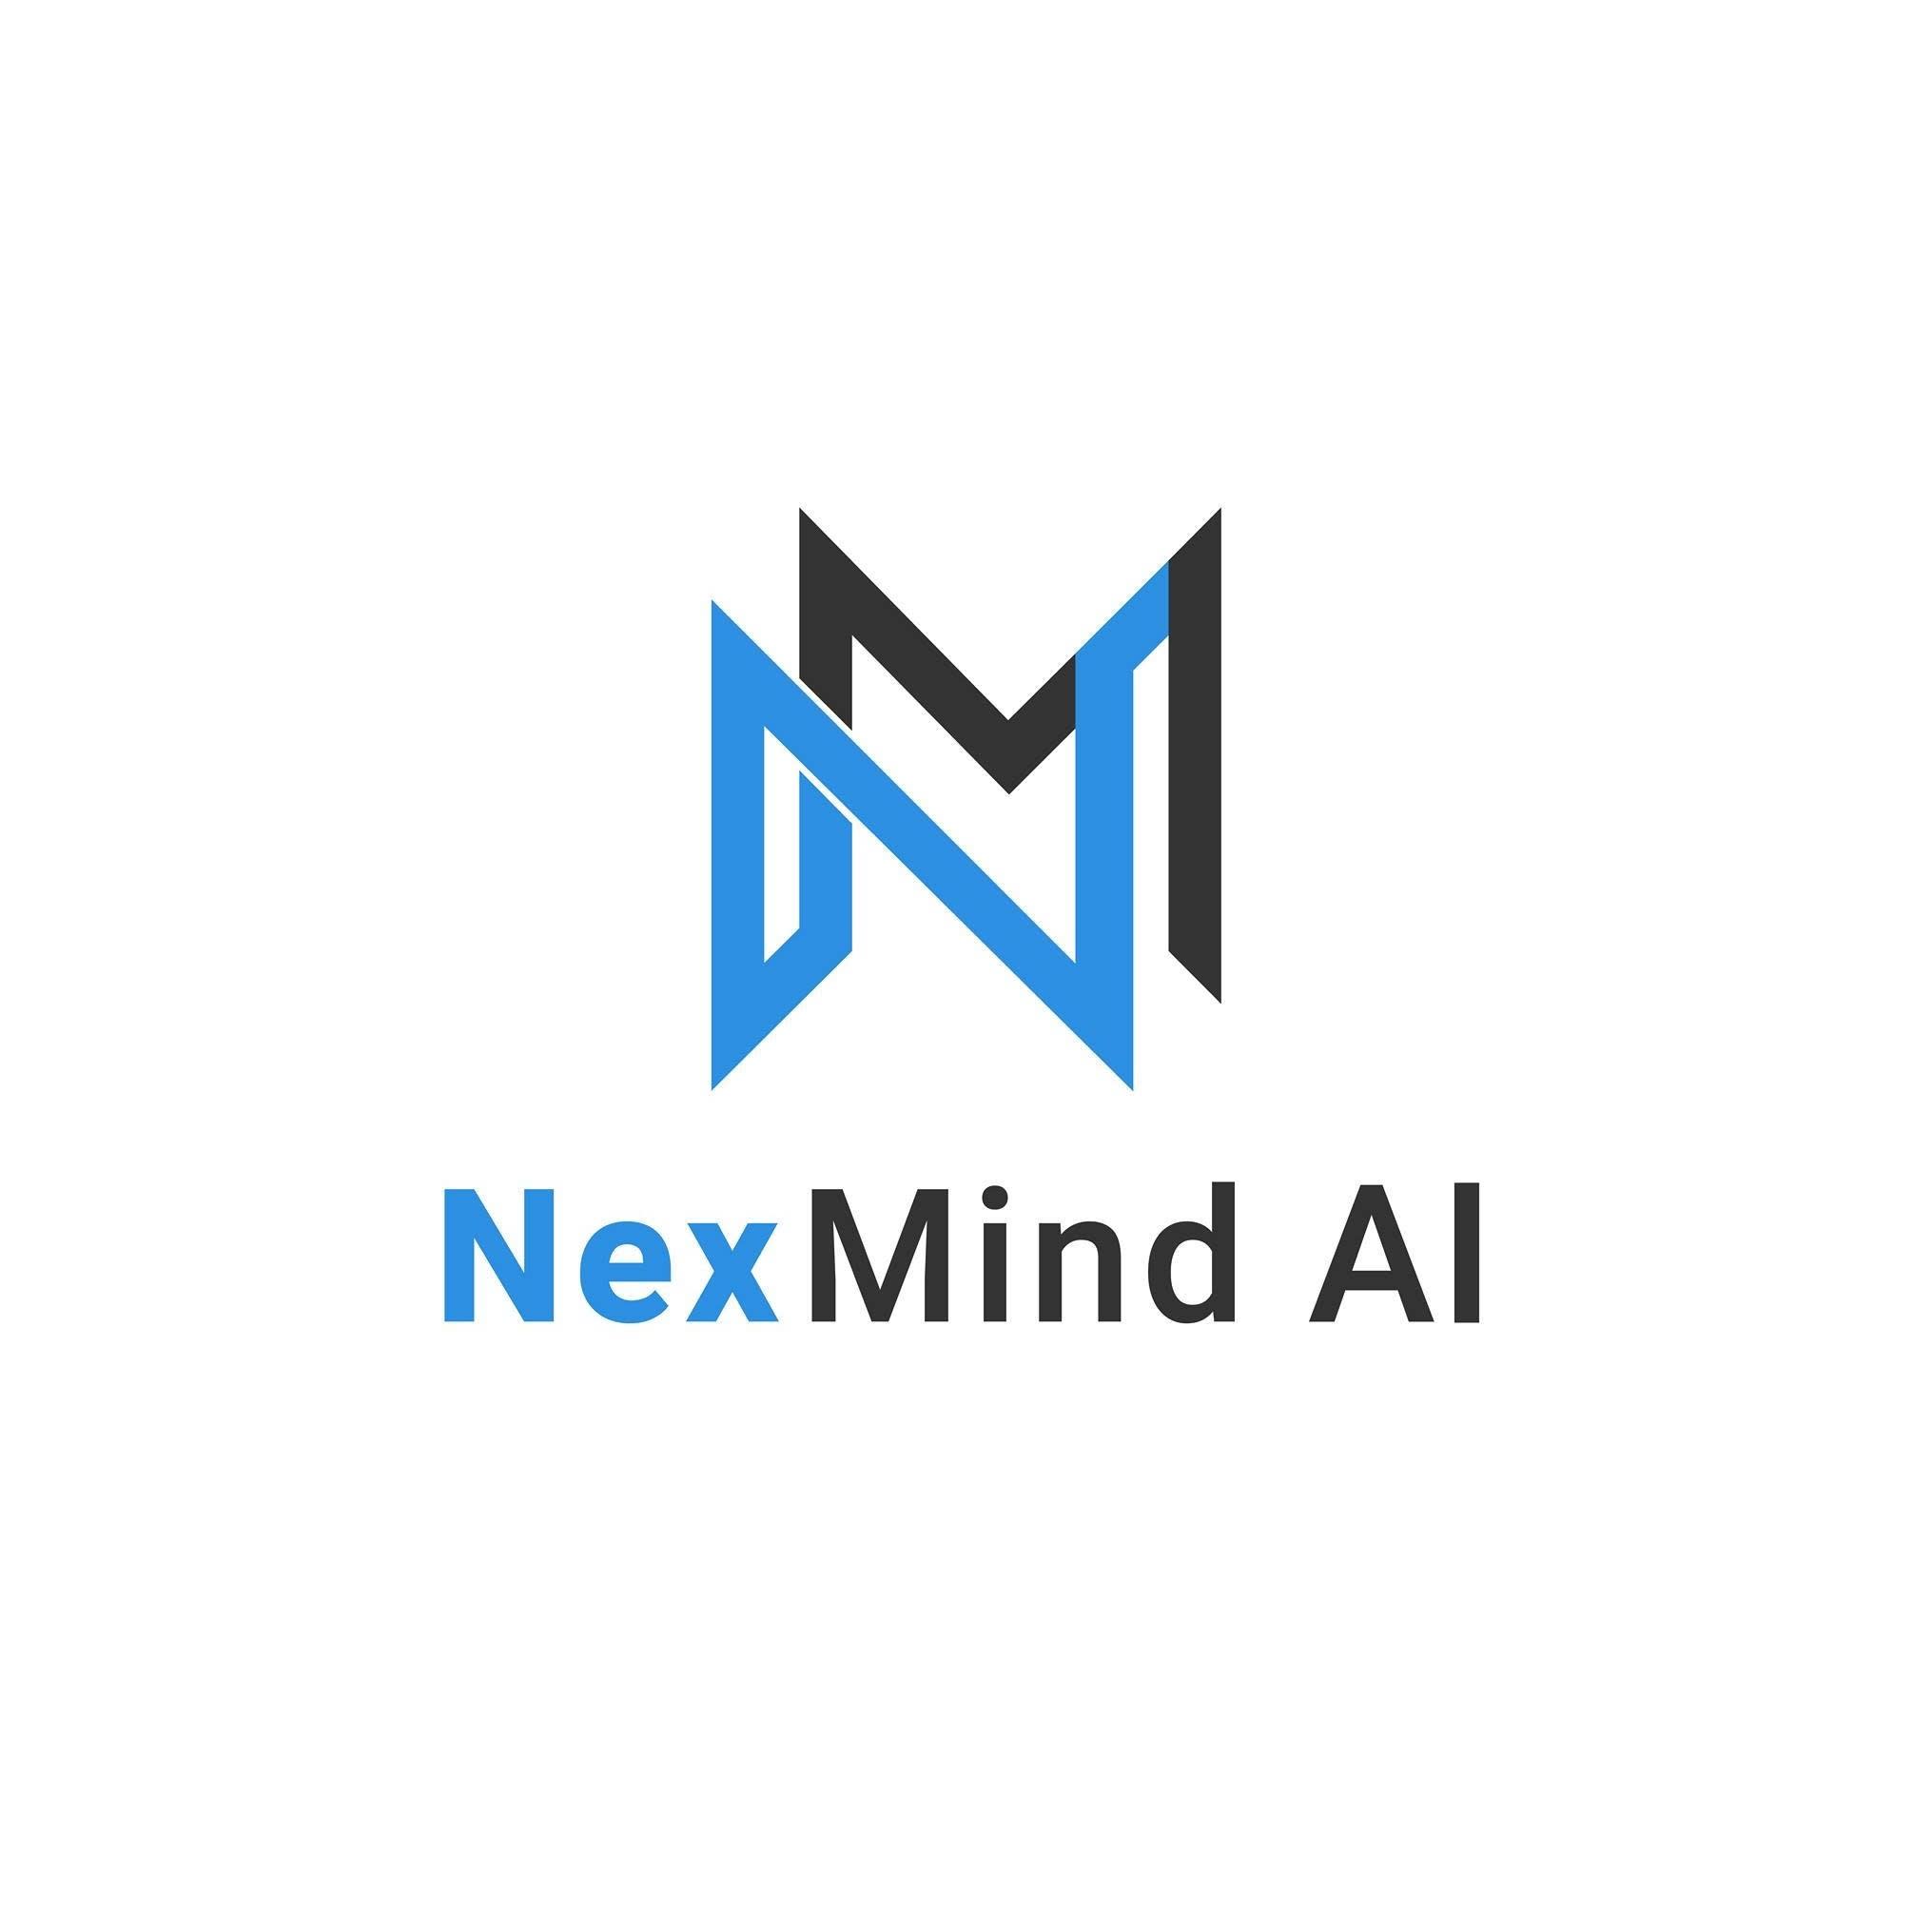 NexMind AI